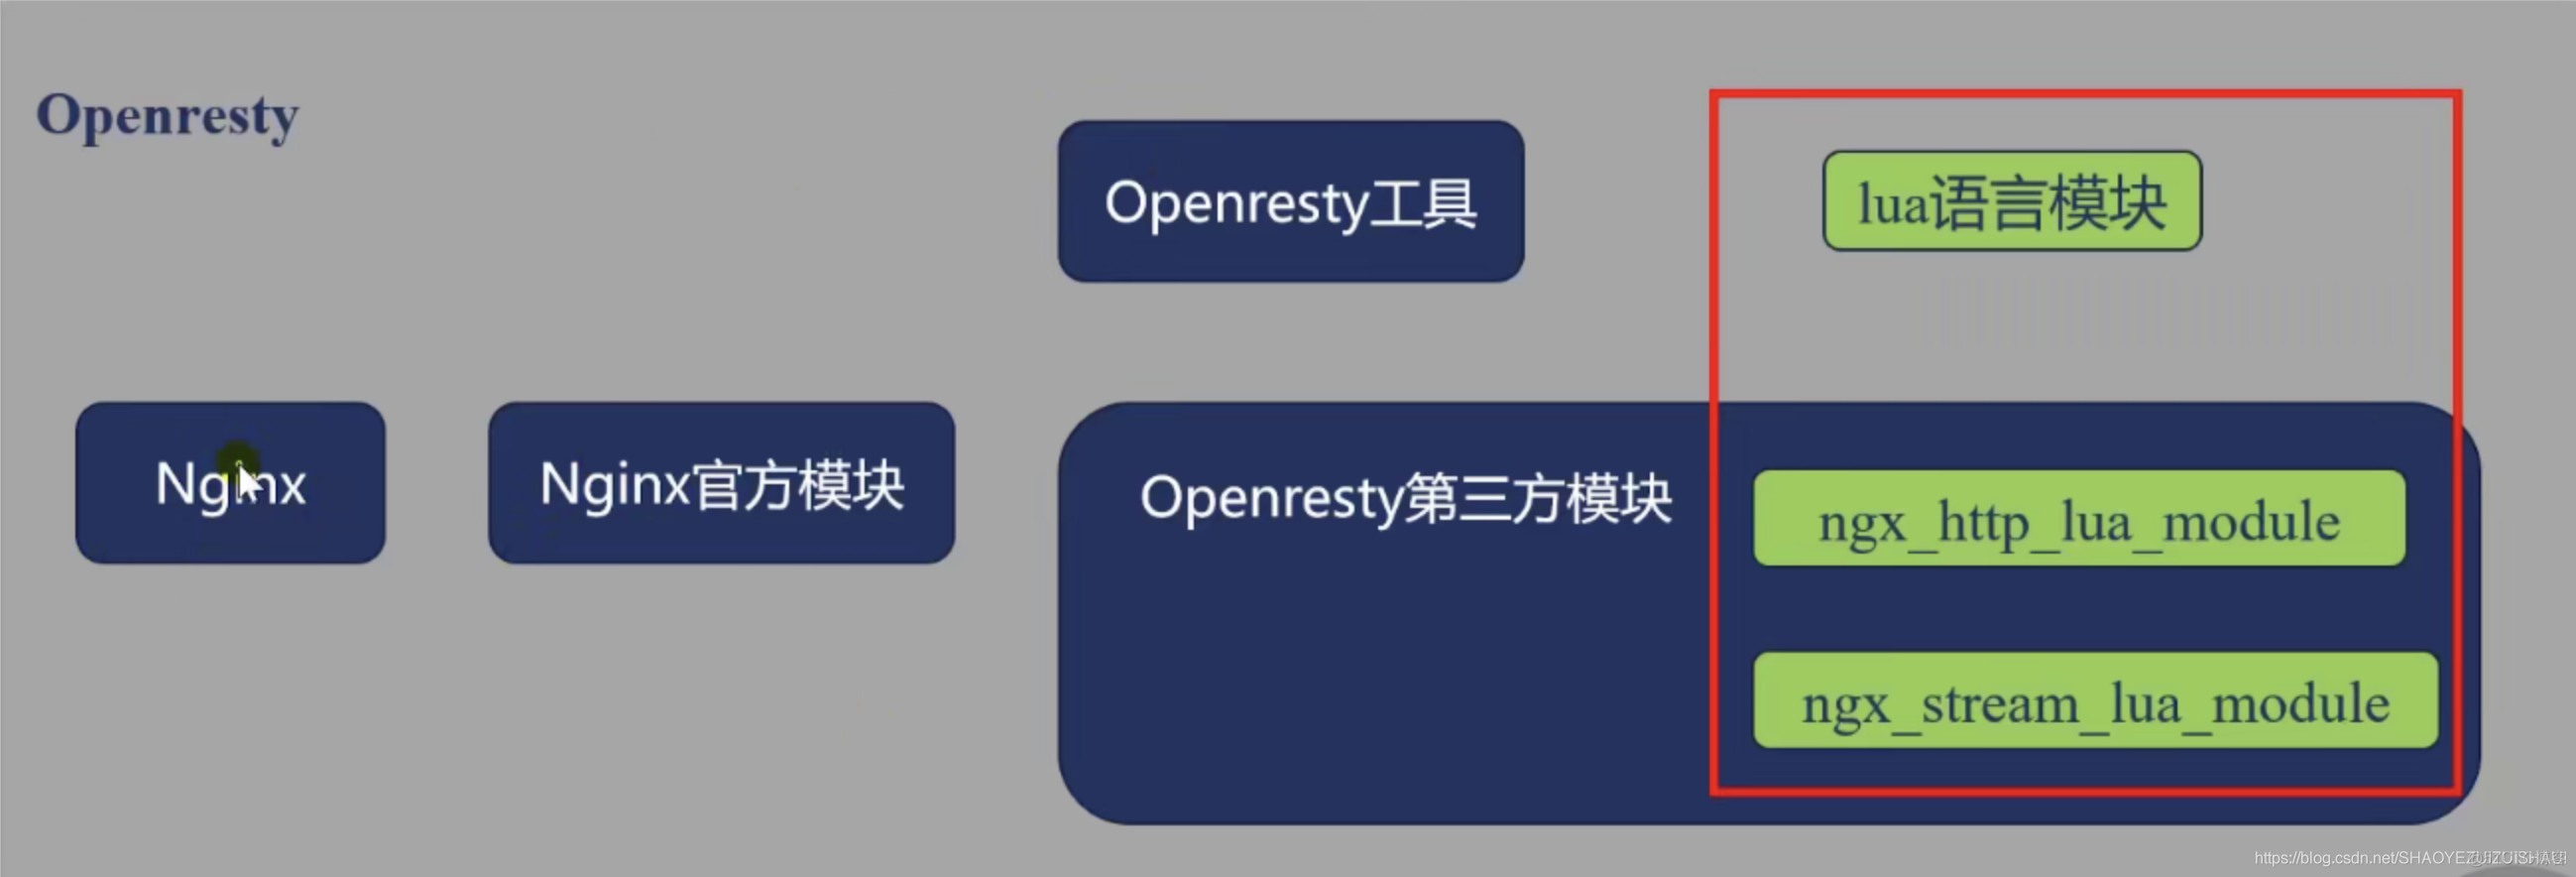 openresty概述及Lua语言的嵌入_运行机制_02